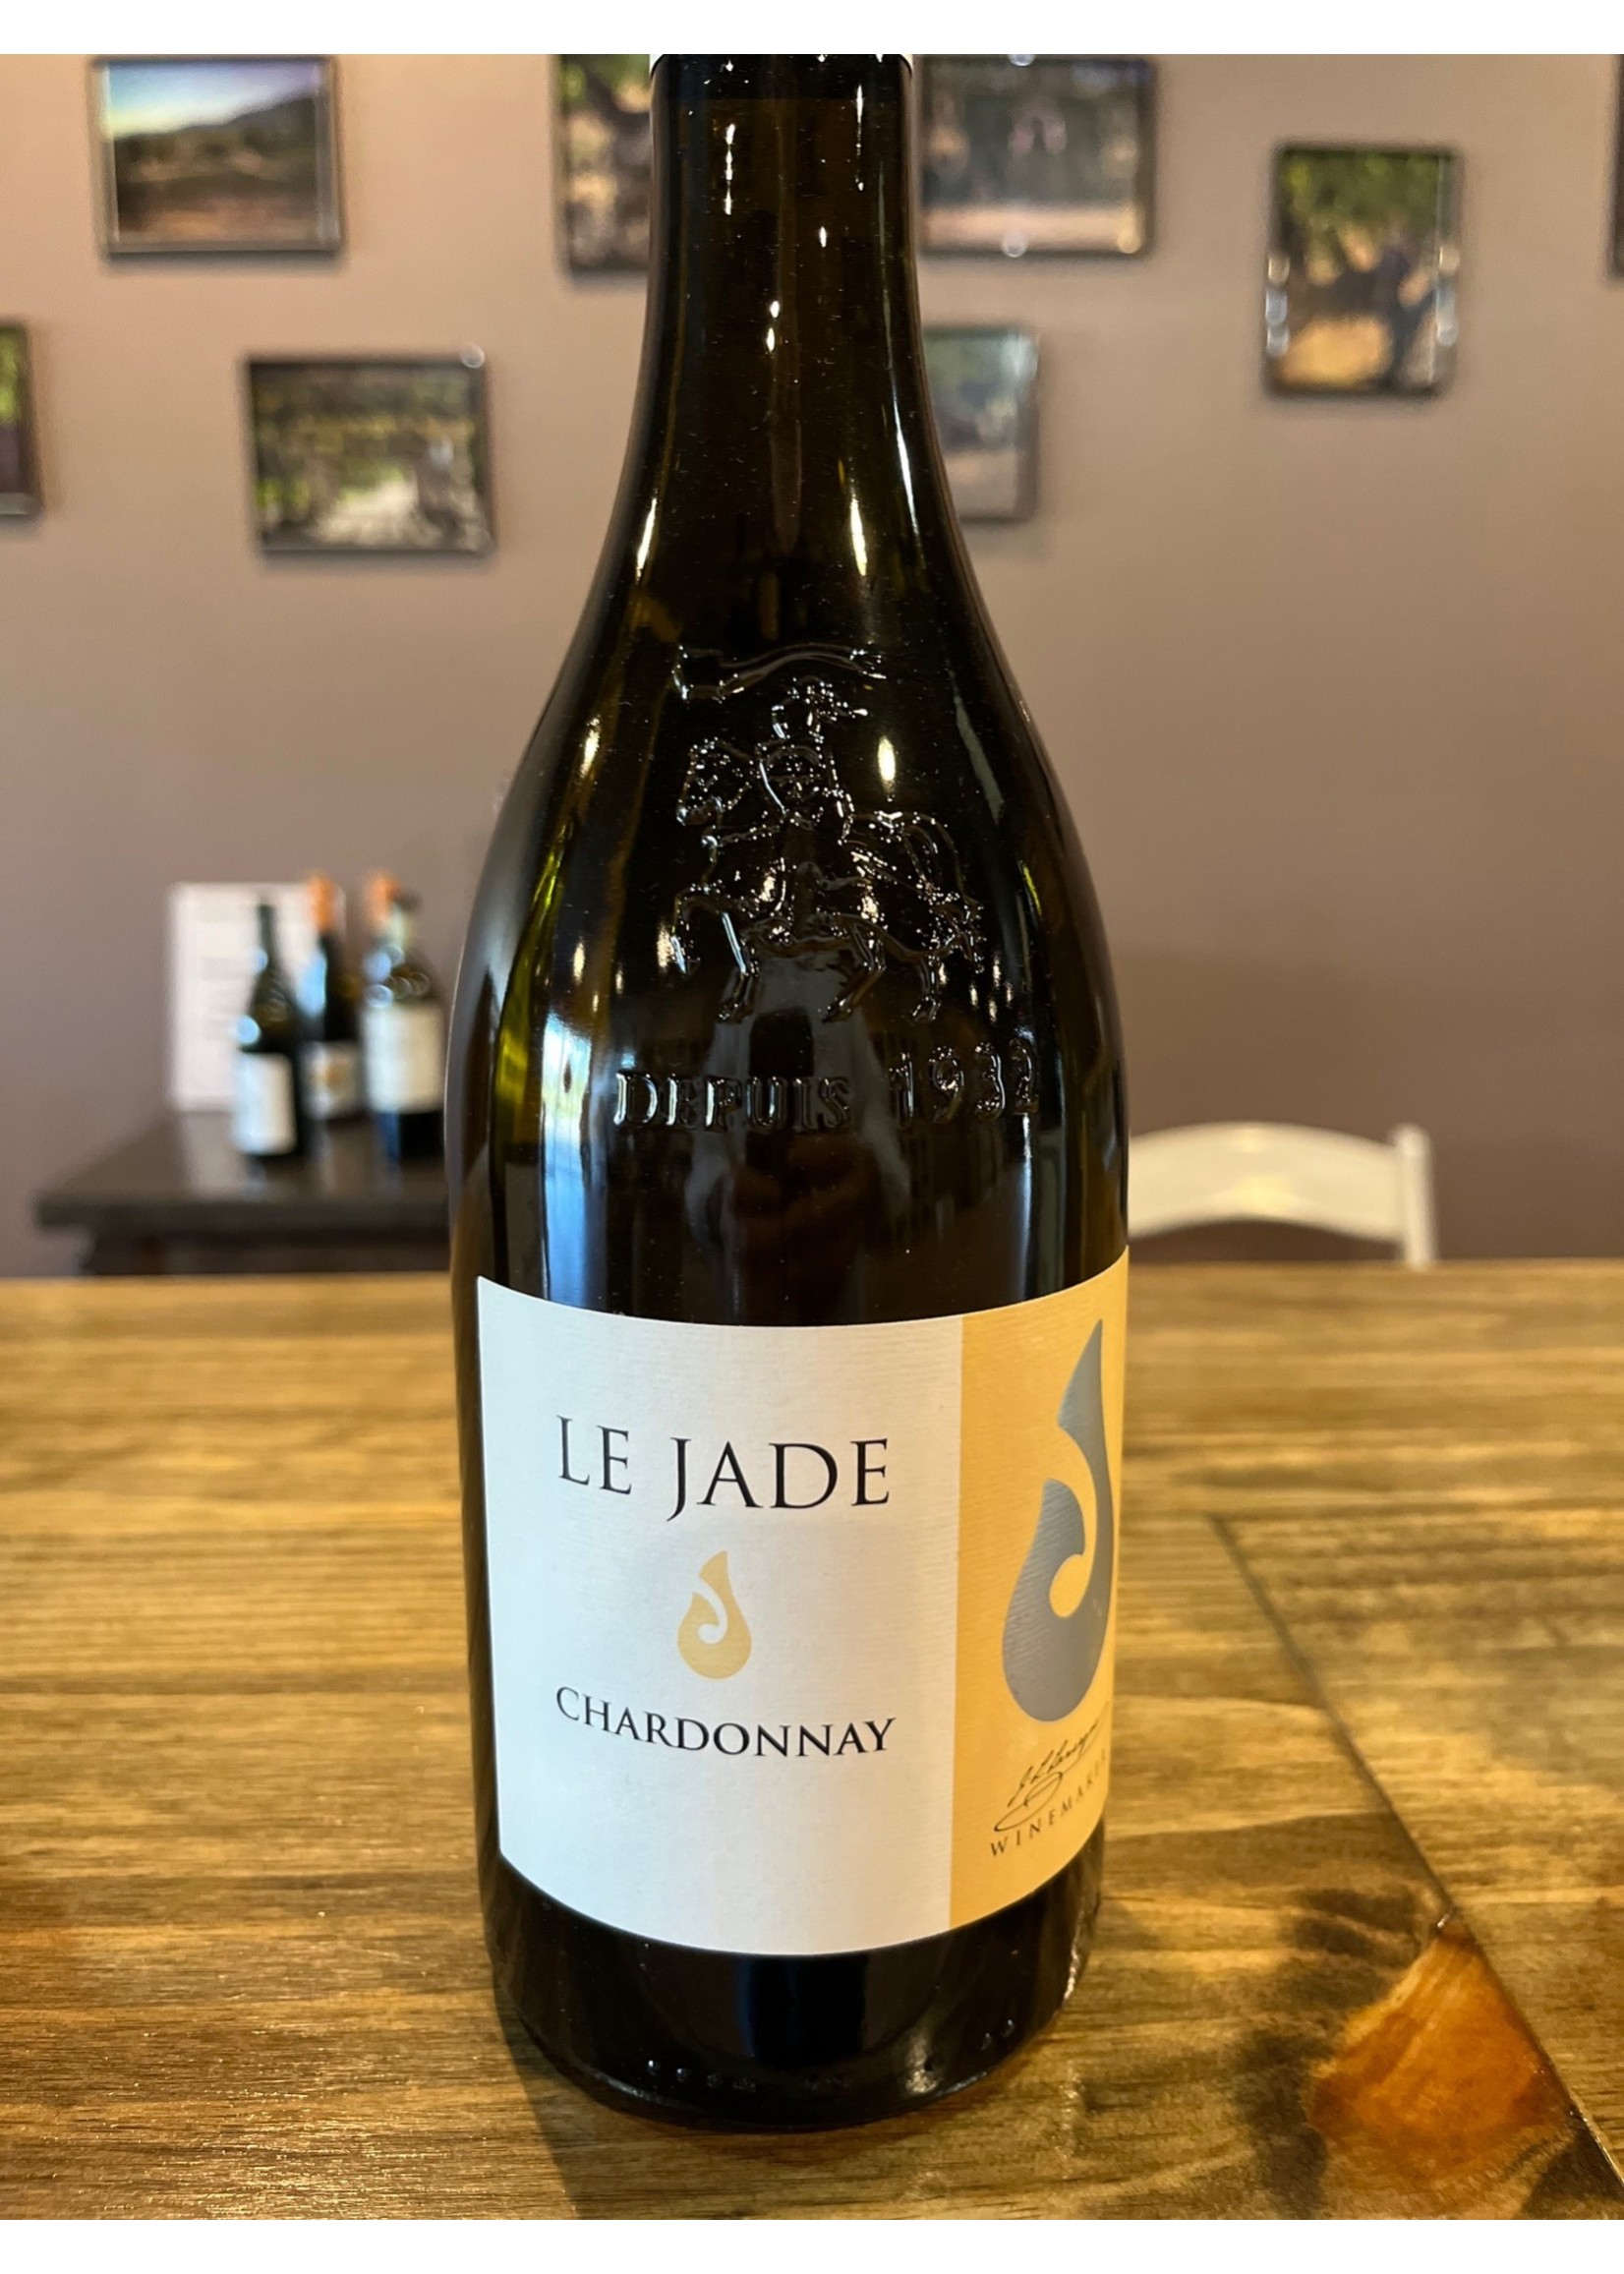 Le Jade Chardonnay 2019